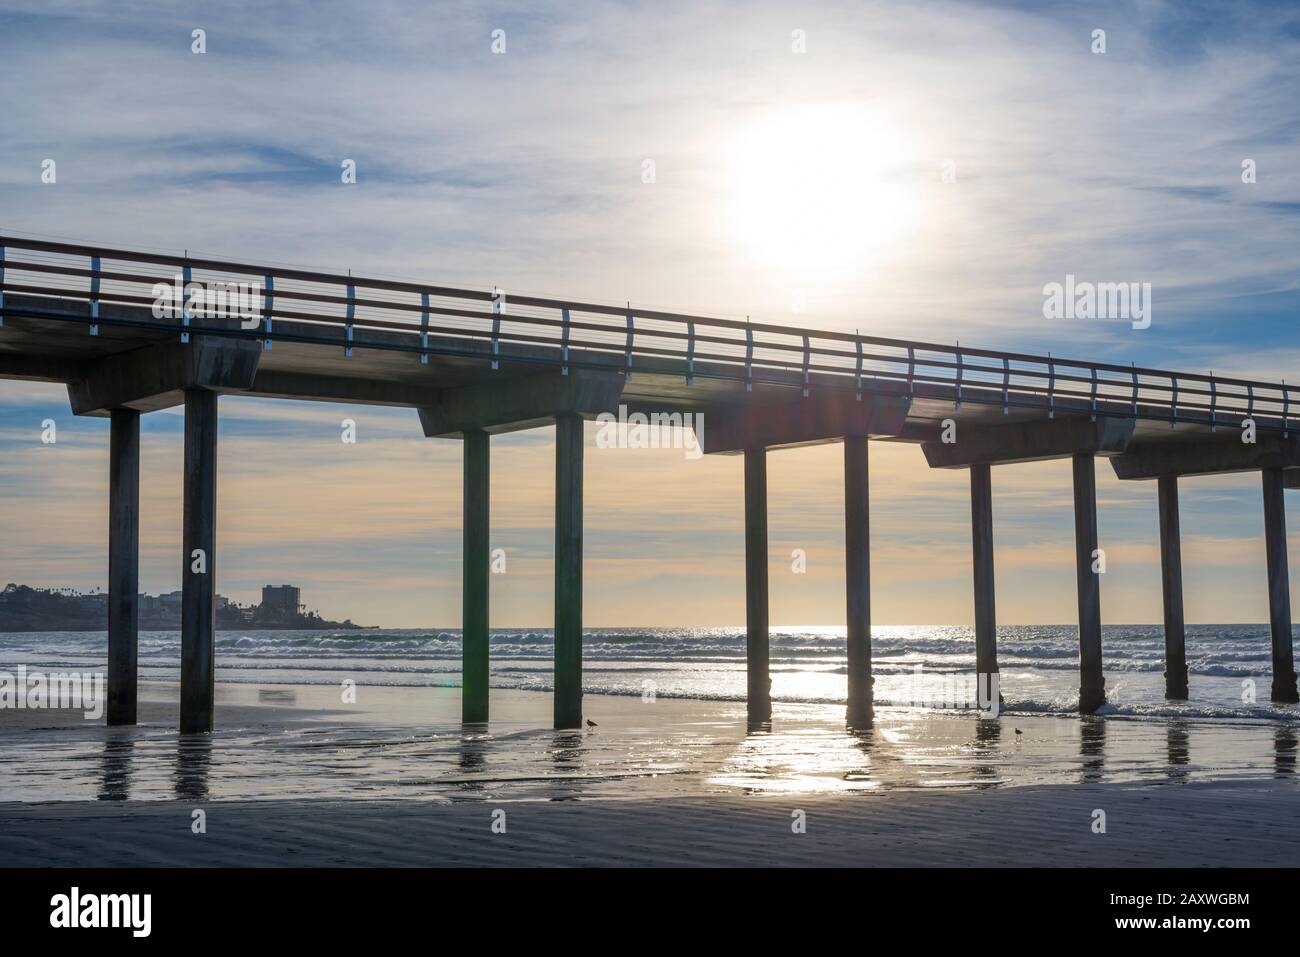 Scripps Pier am Strand La Jolla Shores. La Jolla, CA, USA. Fotografiert vor Sonnenuntergang an einem Wintertag. Stockfoto